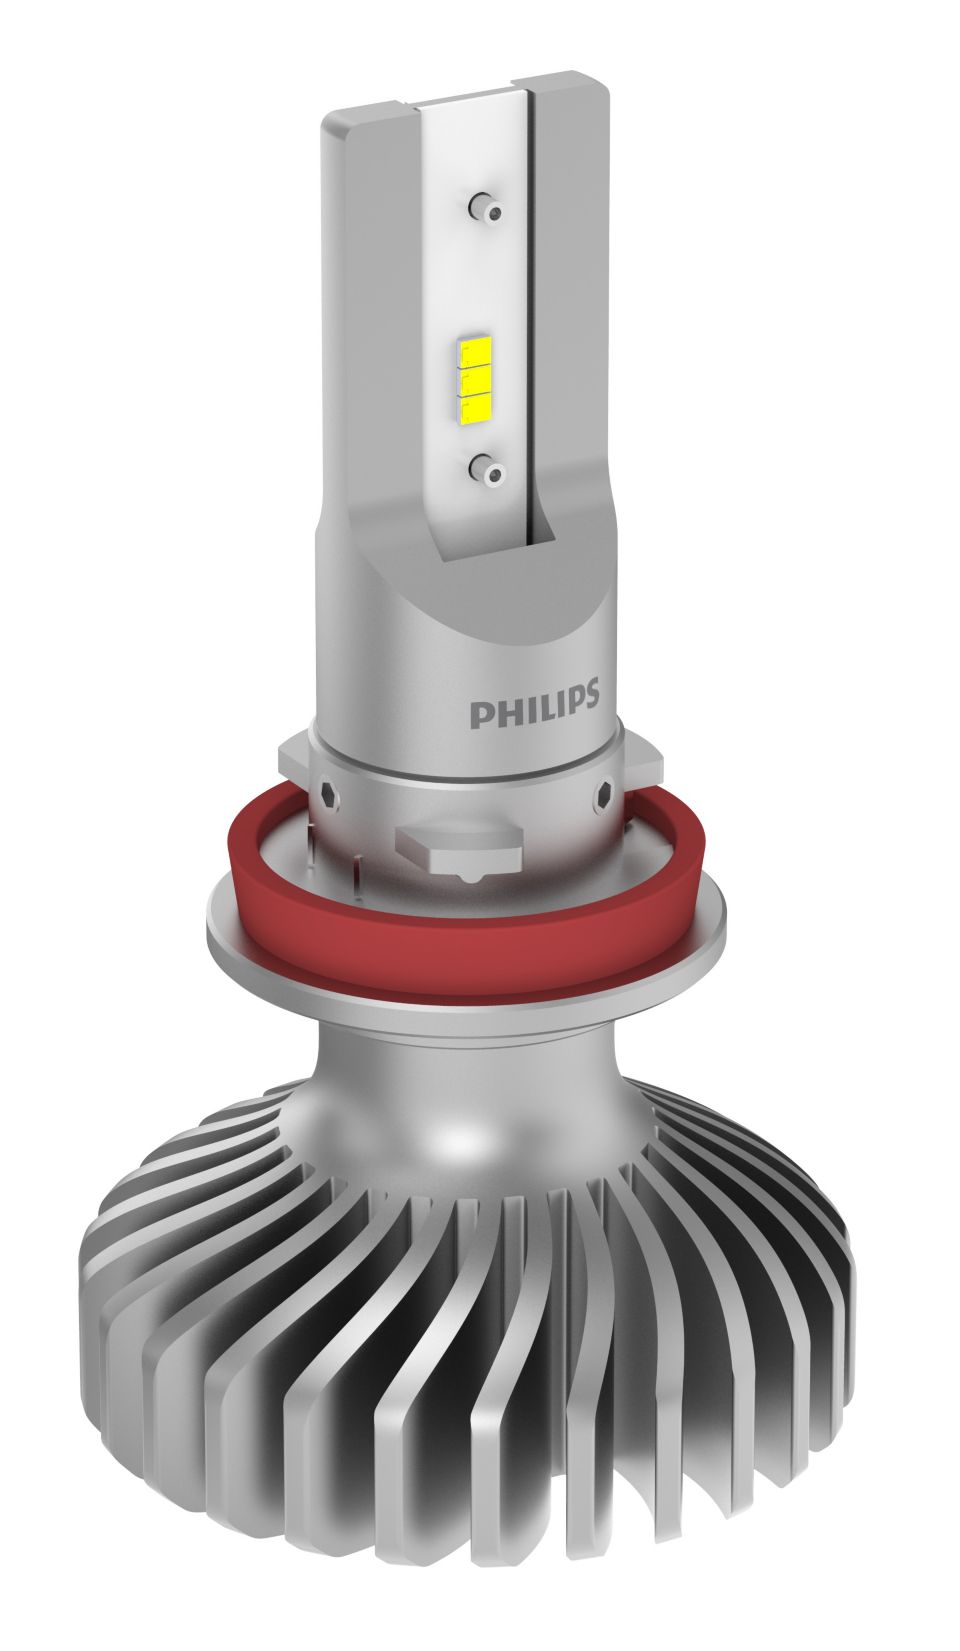 2x PHILIPS Ultinon Access H7 LED Headlights bulbs 6000K - Plug and Play